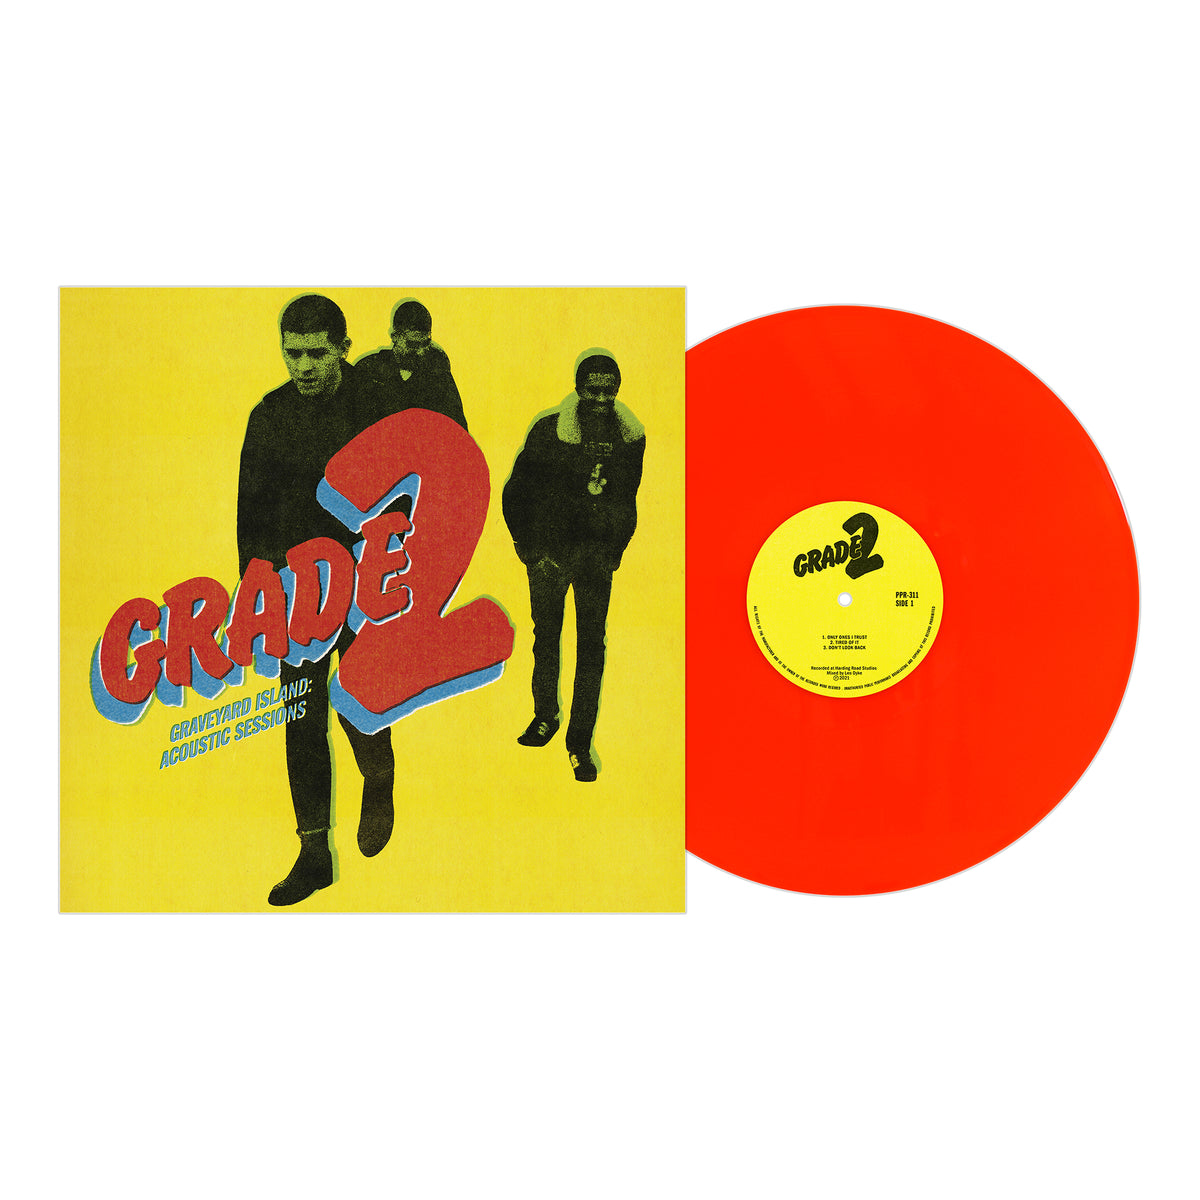 Grade 2 - Graveyard Island: Acoustic Sessions Neon Orange Vinyl LP